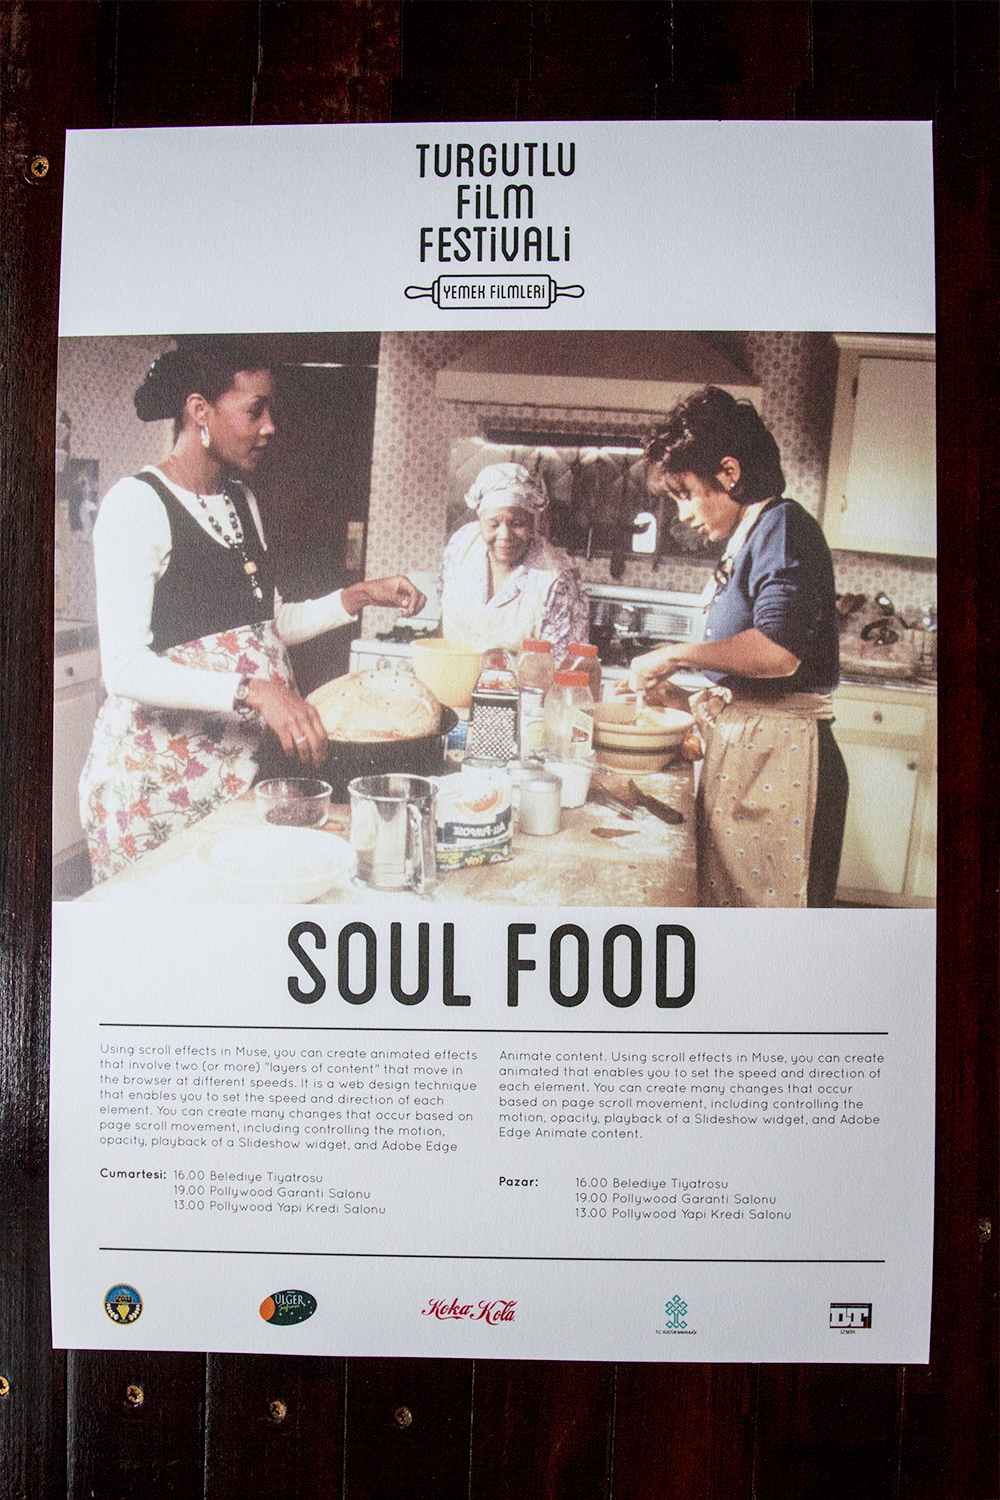 film festival festival festival website Website movie website book design Poster Design poster movie poster Cinema poster turgutlu festival design Movies food movies Food 